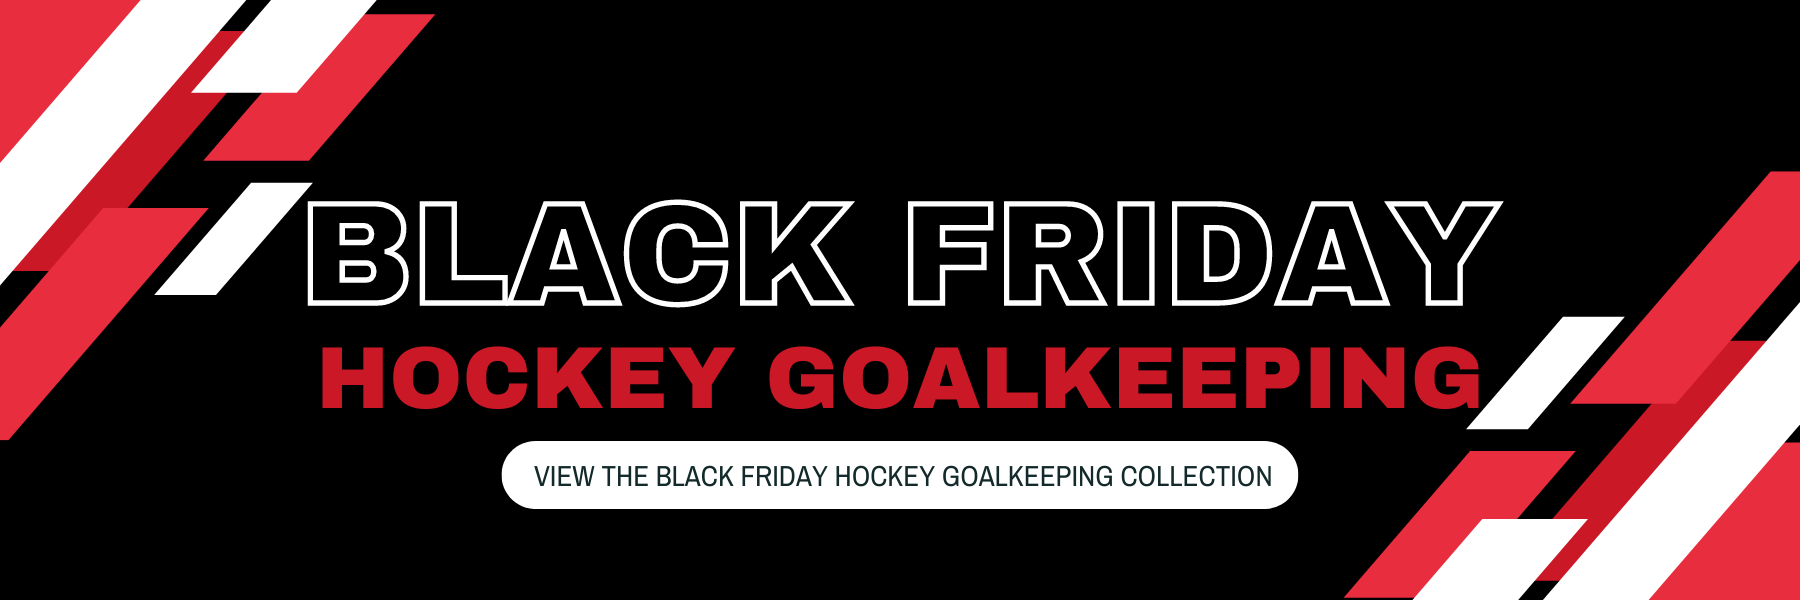 Black Friday Field Hockey Goalkeeping Deals | Total Hockey